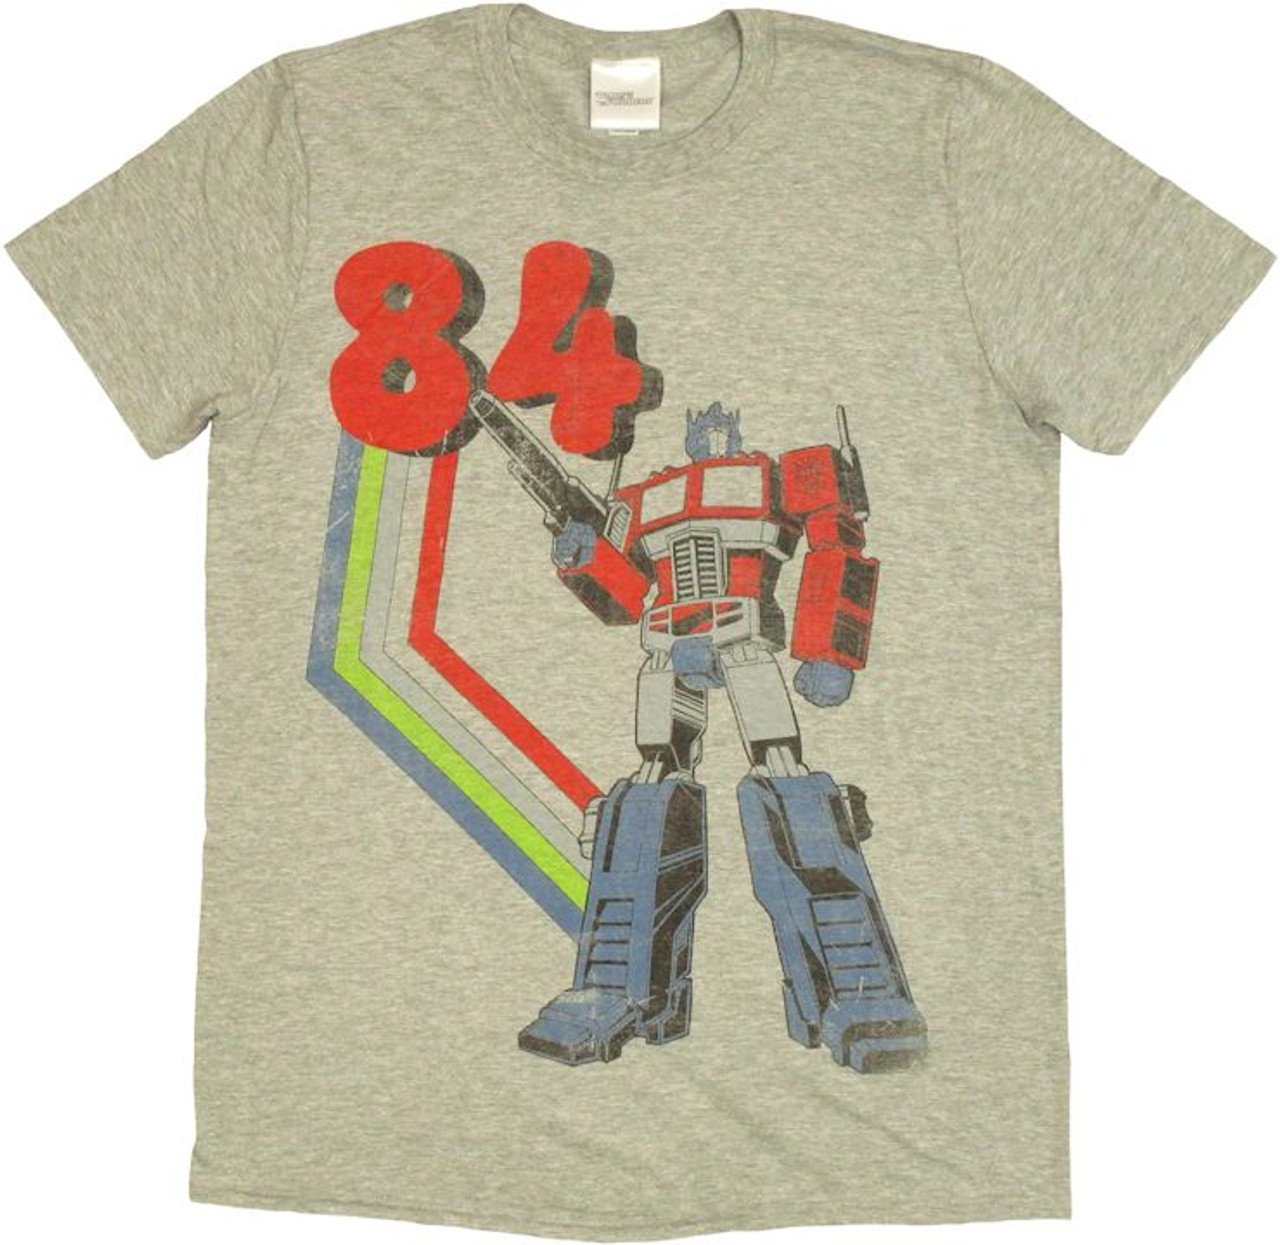 transformers 84 t shirt